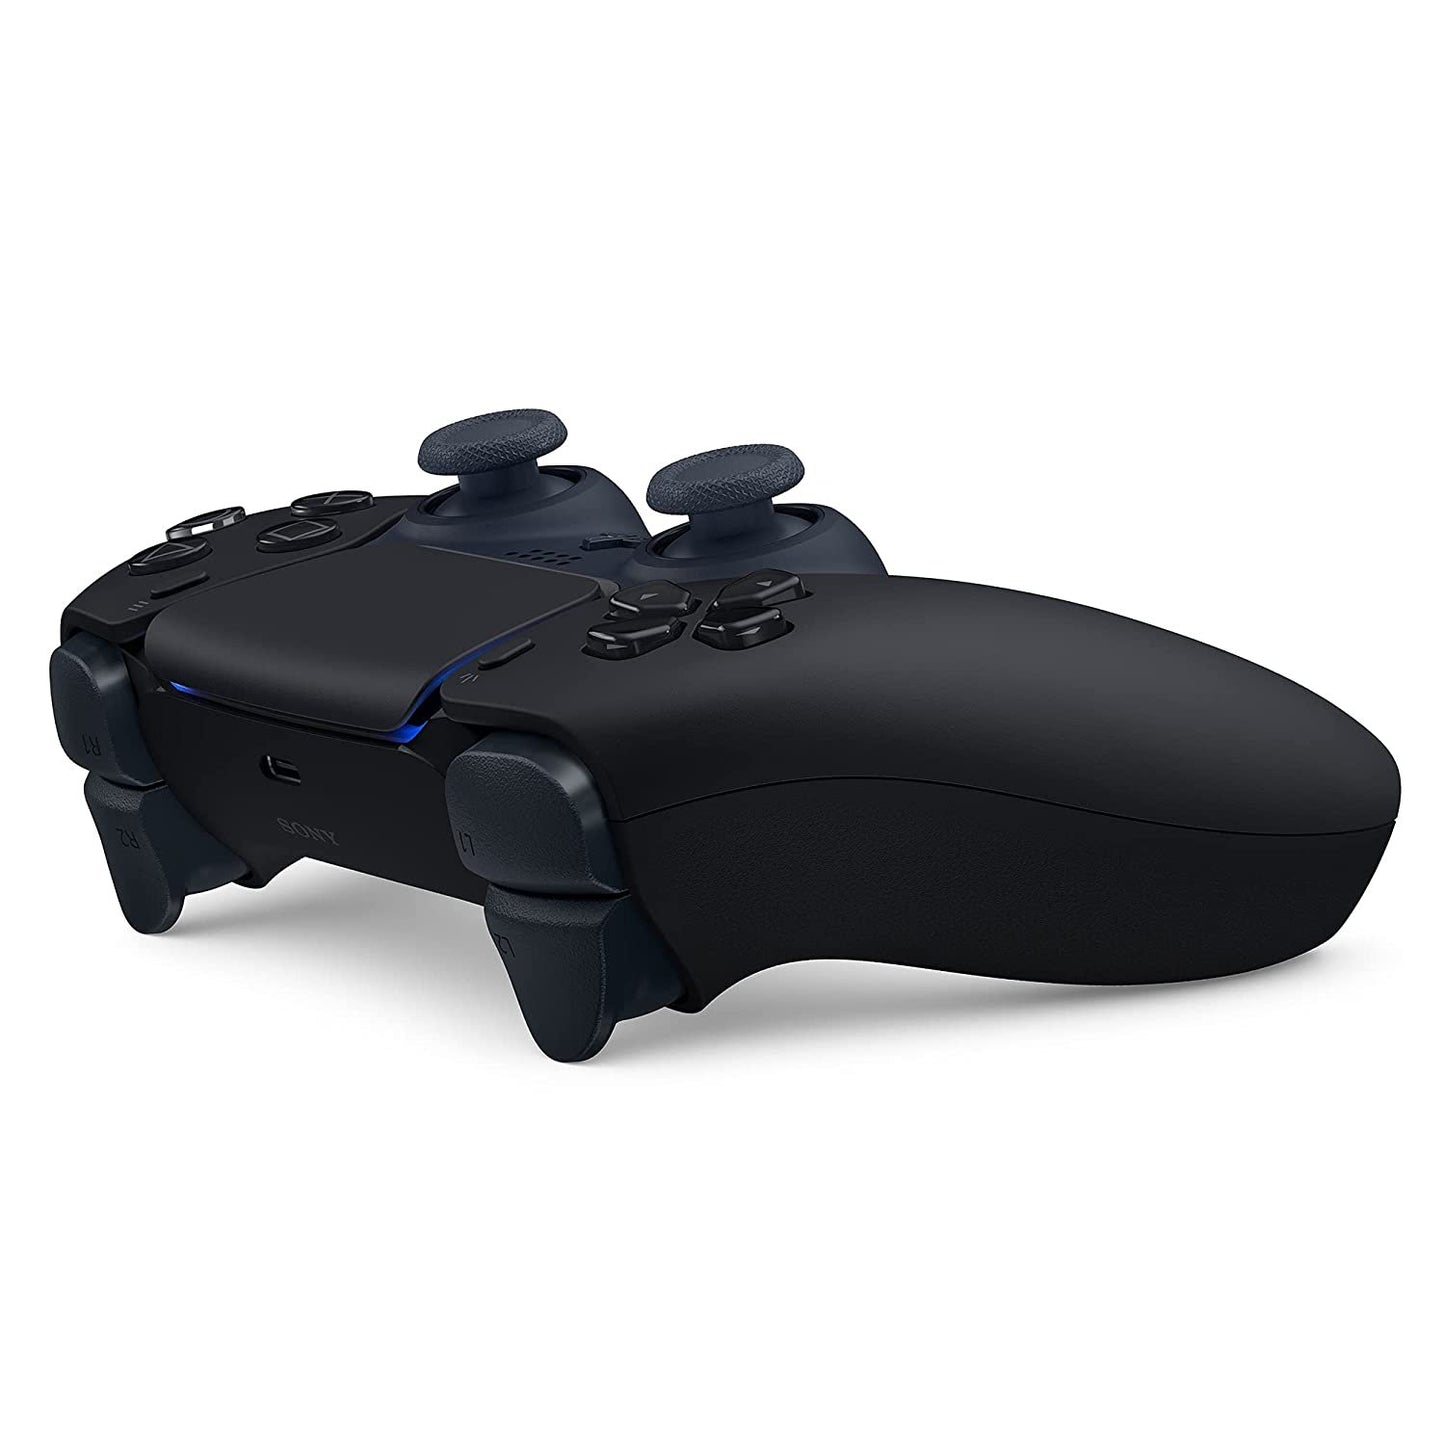 Control inalámbrico DualSense PlayStation 5 – Negro Medianoche